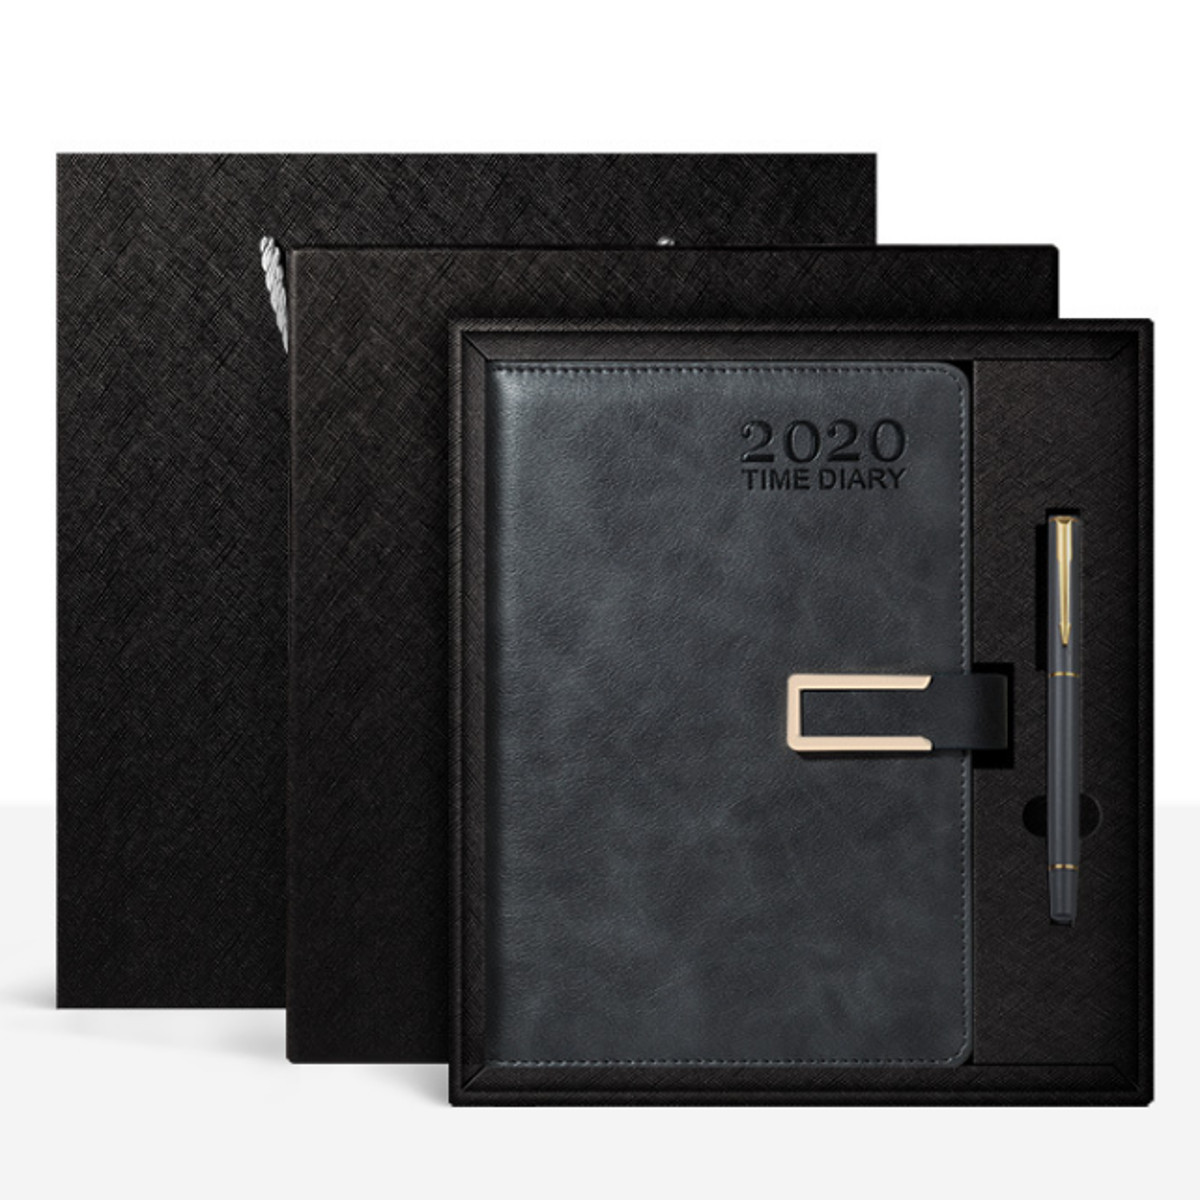 

2020 schedule book 365 days daily schedule calendar notepad work log notebook